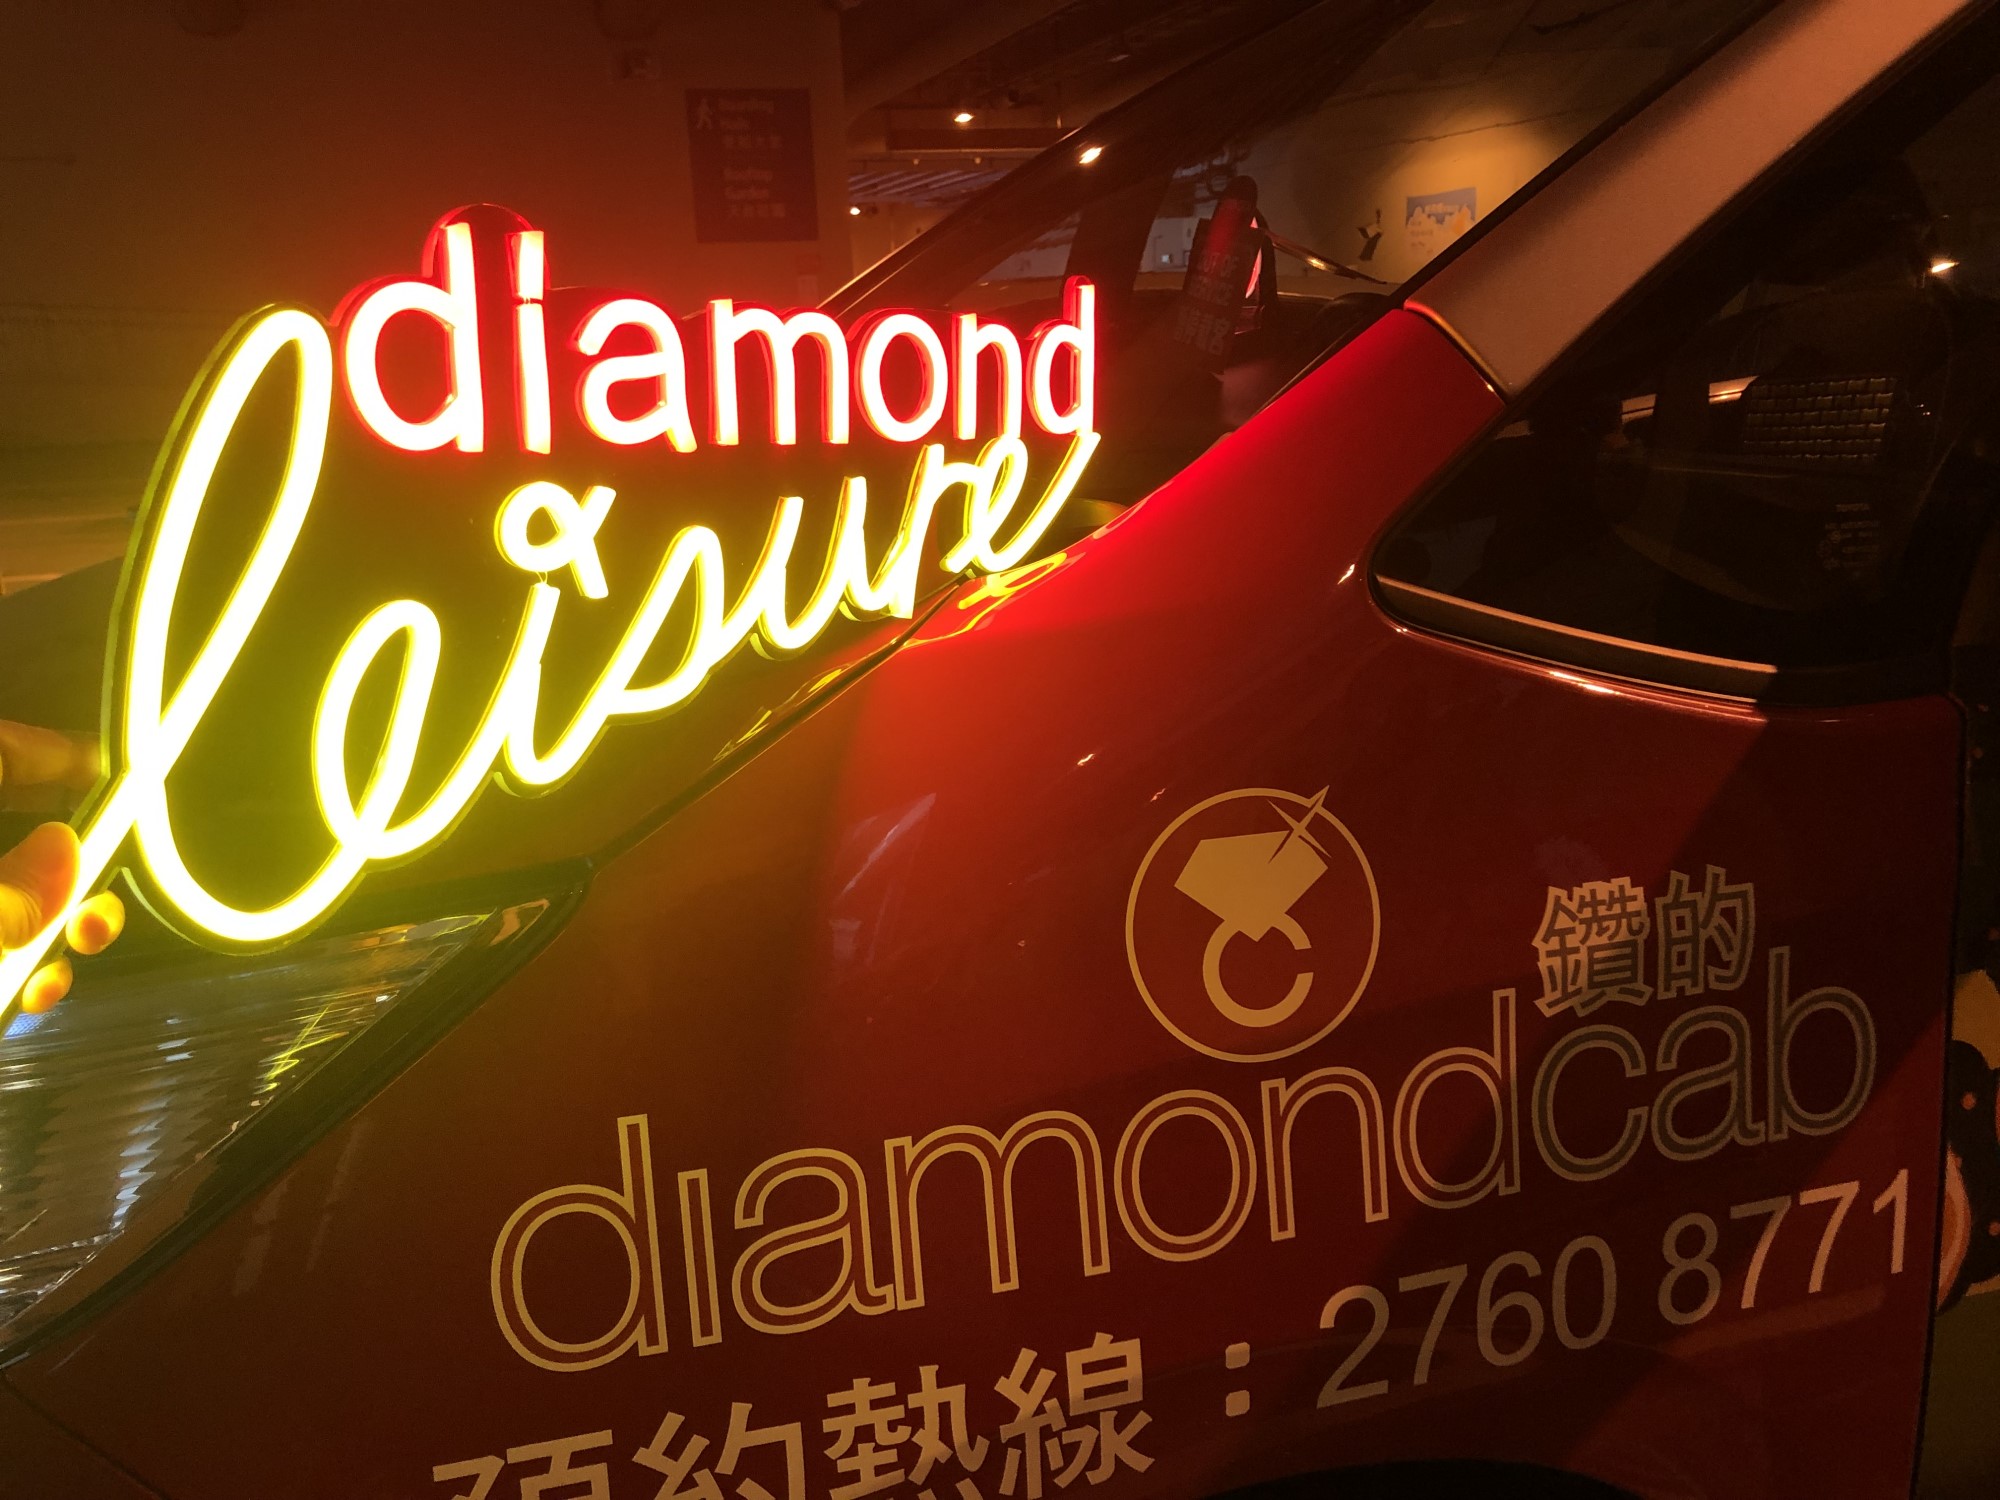 diamondcab logo on a car